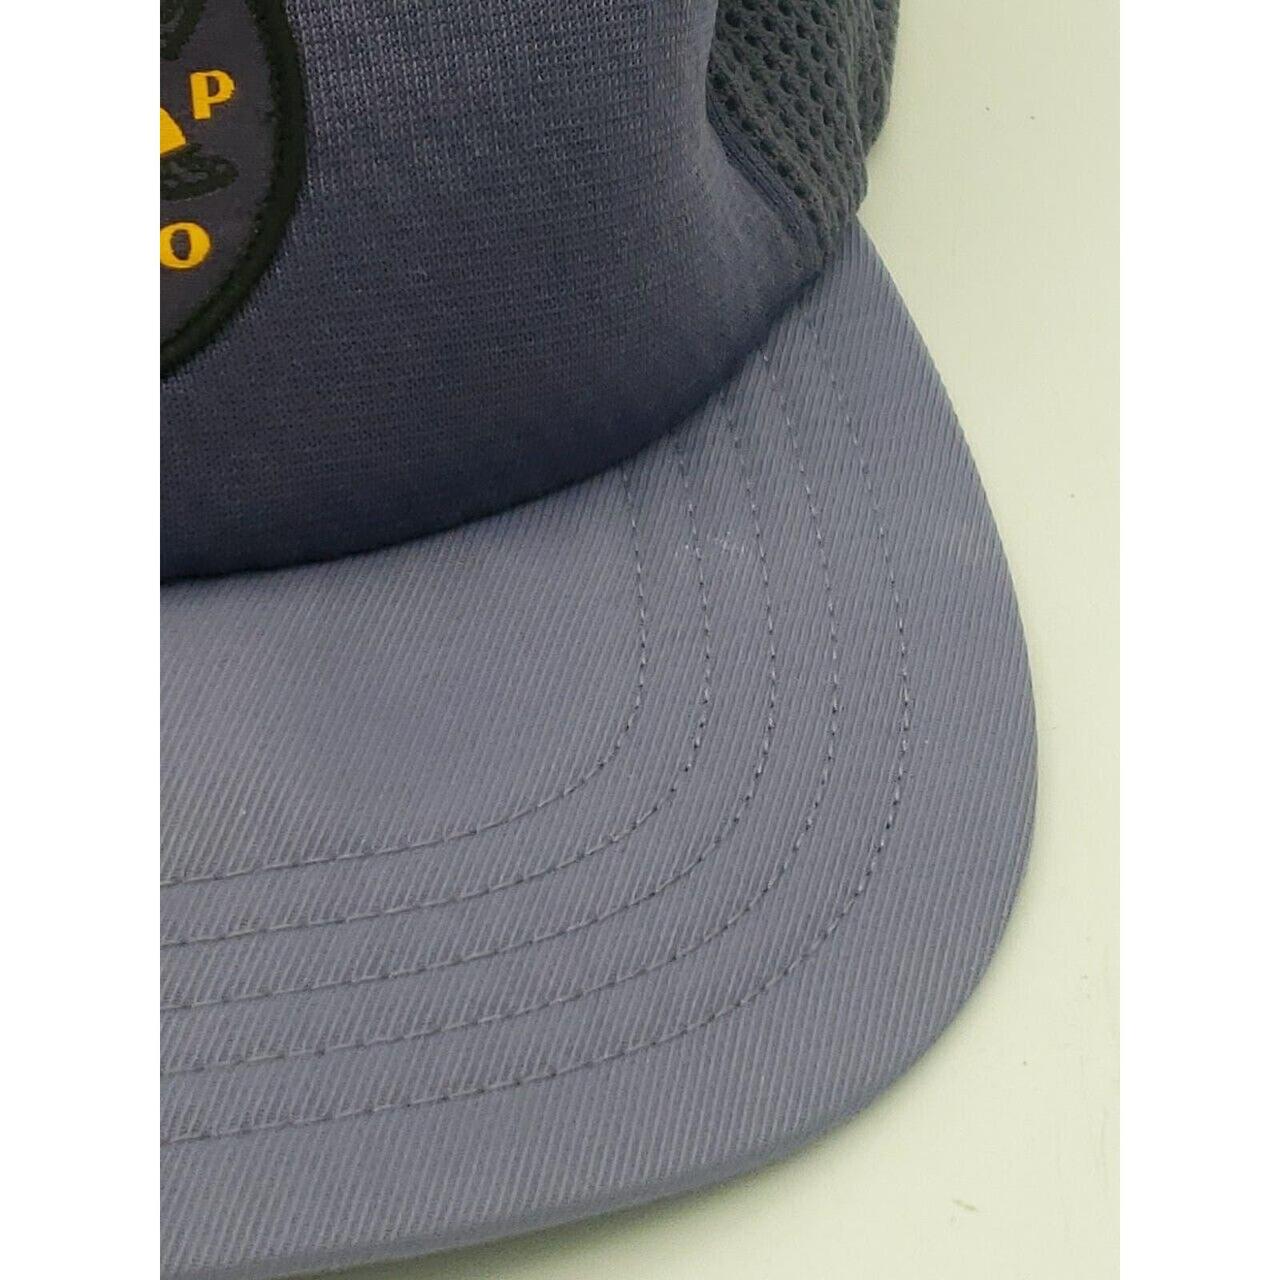 REI Packable Sun Hat